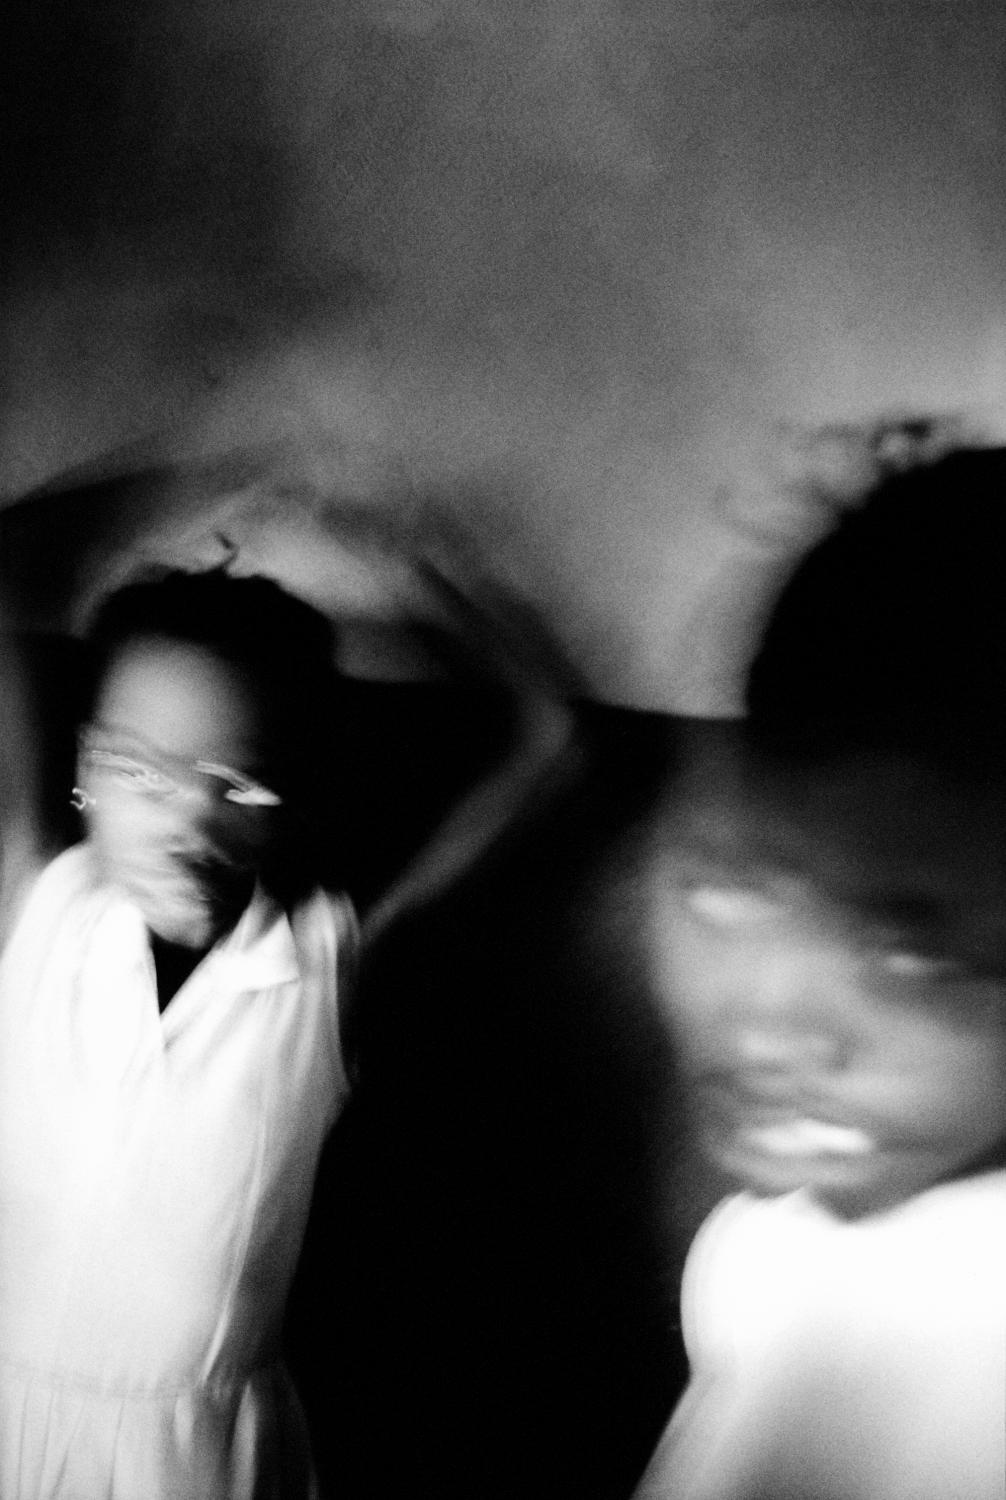 Blind Faith - Sierra Leone, Freetown, June 2002.
‘Milton...